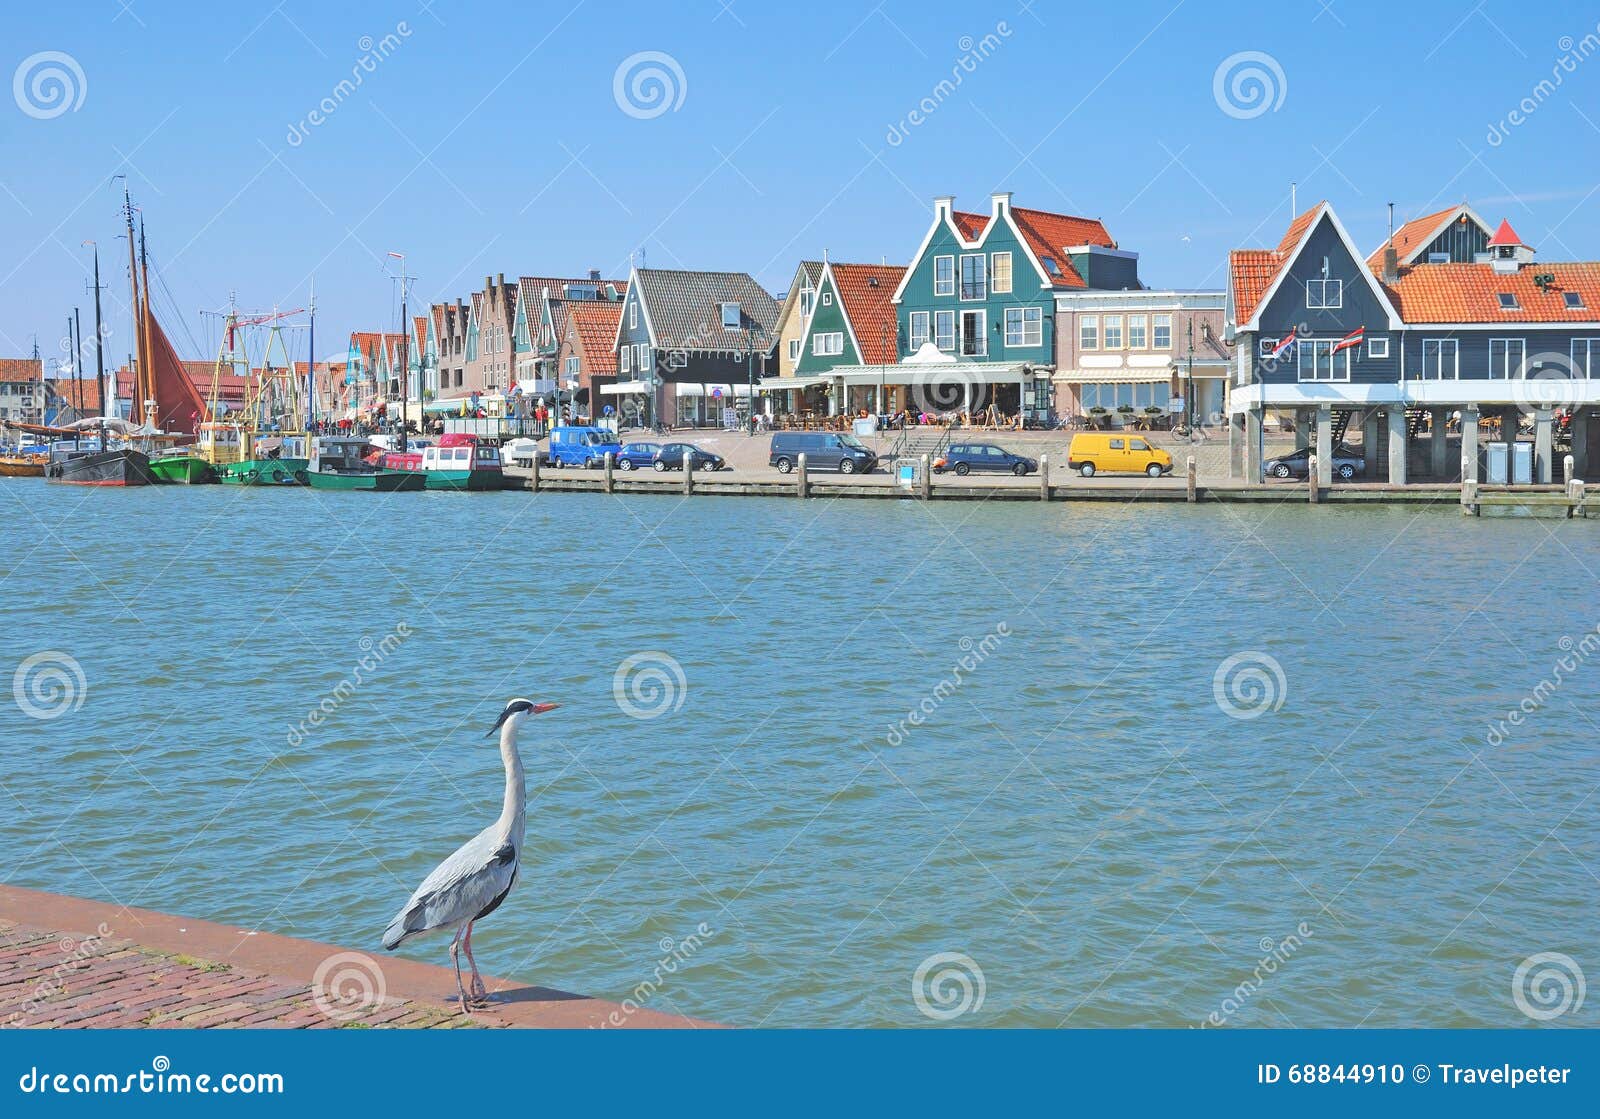 harbor of edam-volendam at ijsselmeer,netherlands